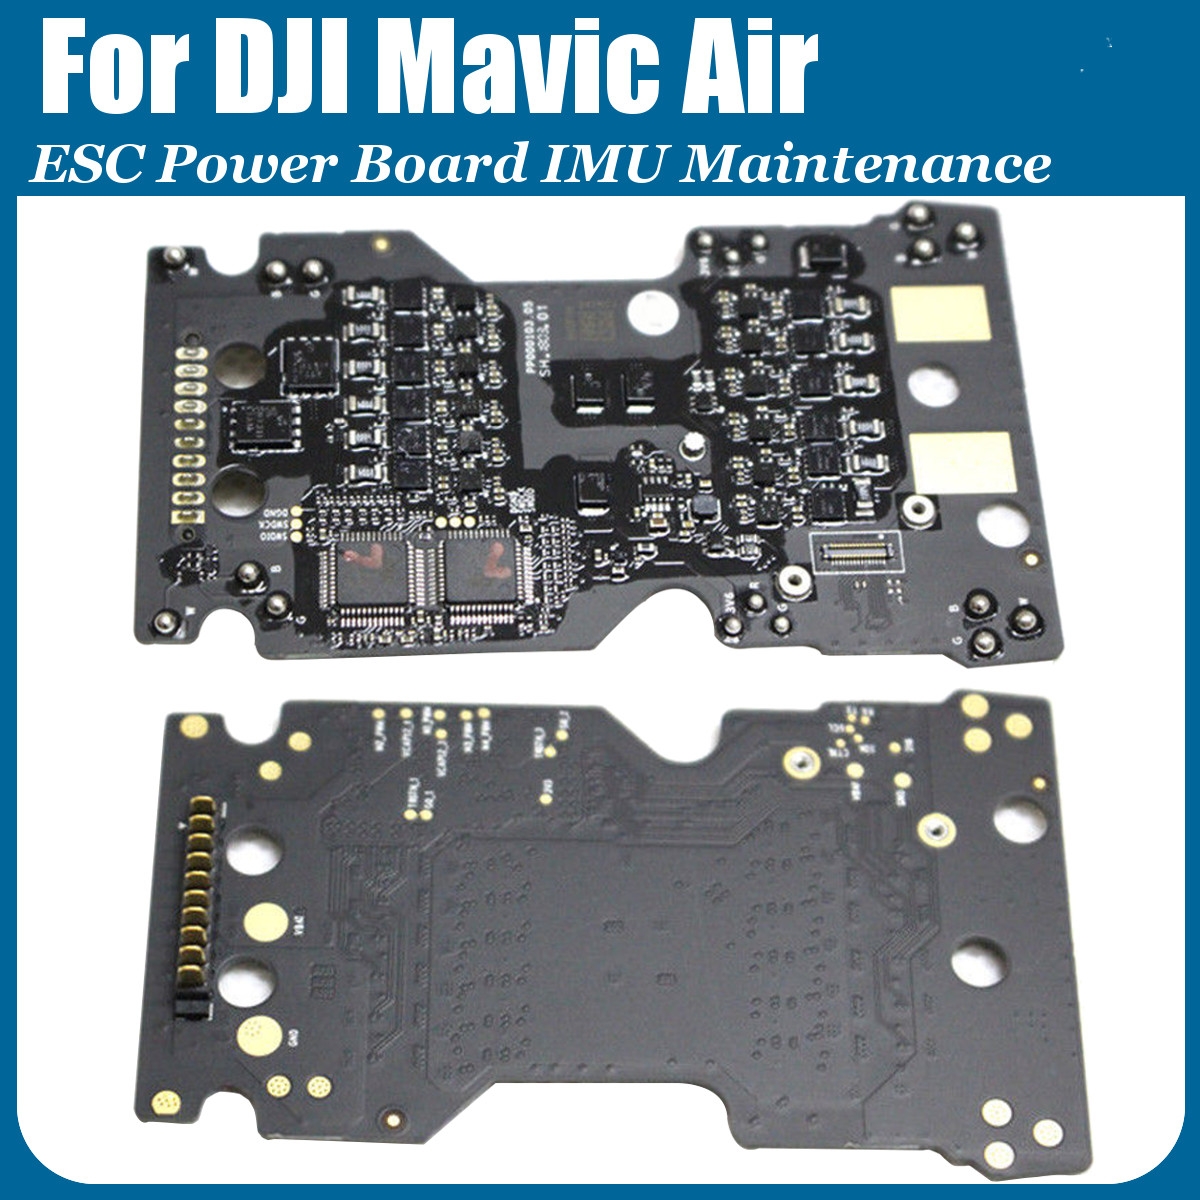 ESC Power Board IMU Maintenance Repair RC Quadcopter Parts For DJI Mavic Air